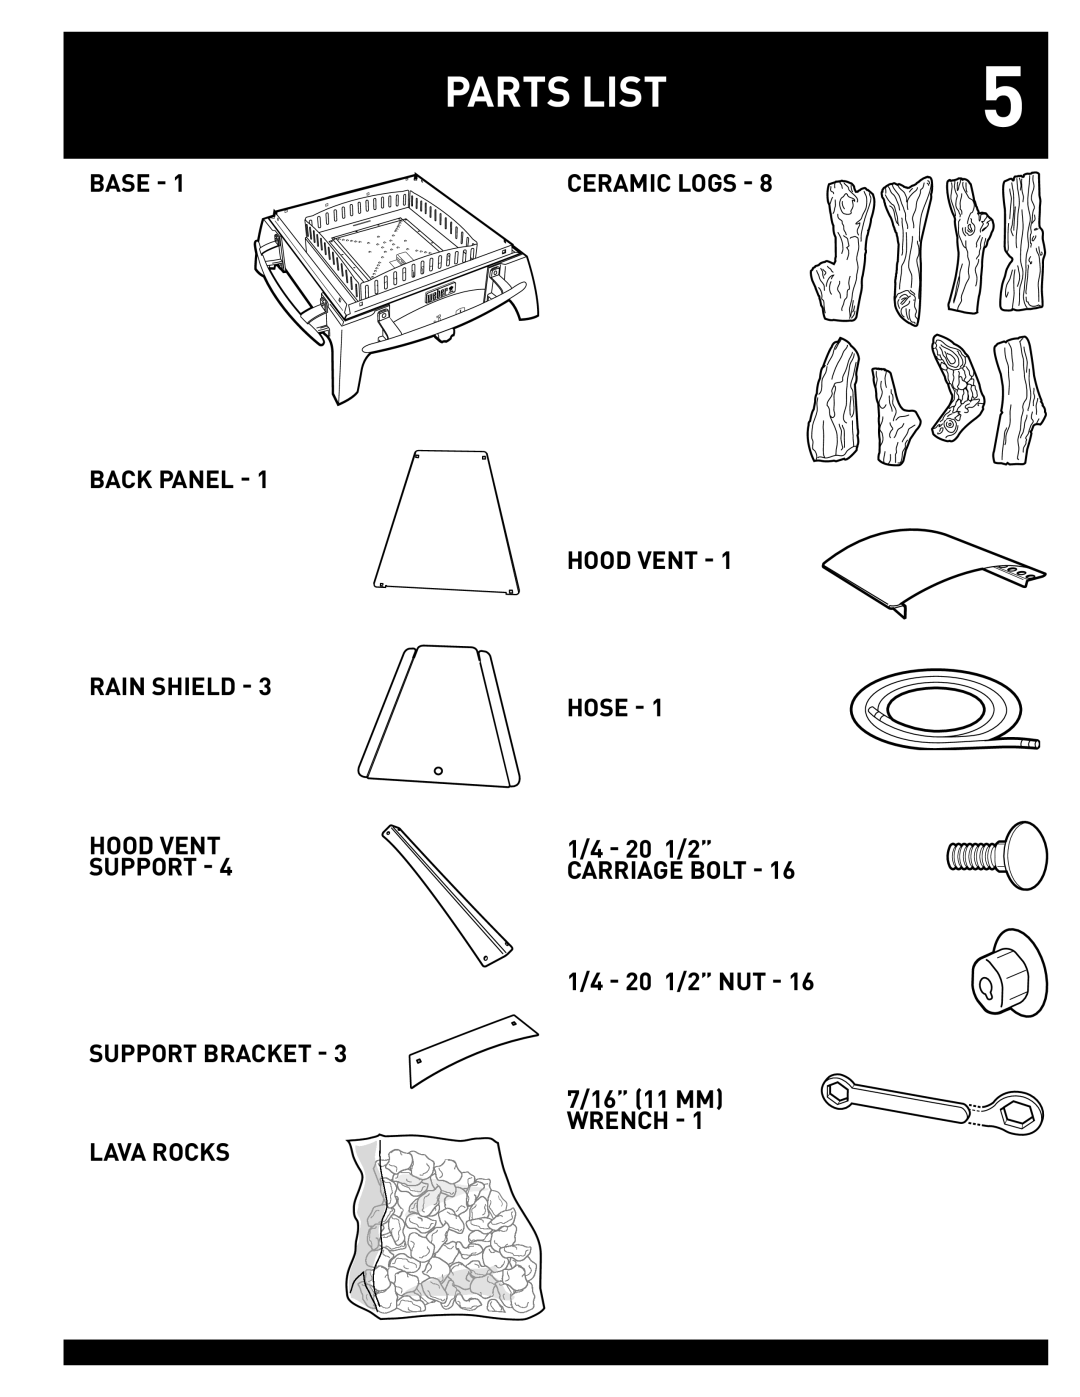 Weber FLAME manual Parts List, 1/4 - 20 1/2” CARRIAGE BOLT, Base - Back Panel - Rain Shield - Hood Vent, Ceramic Logs 